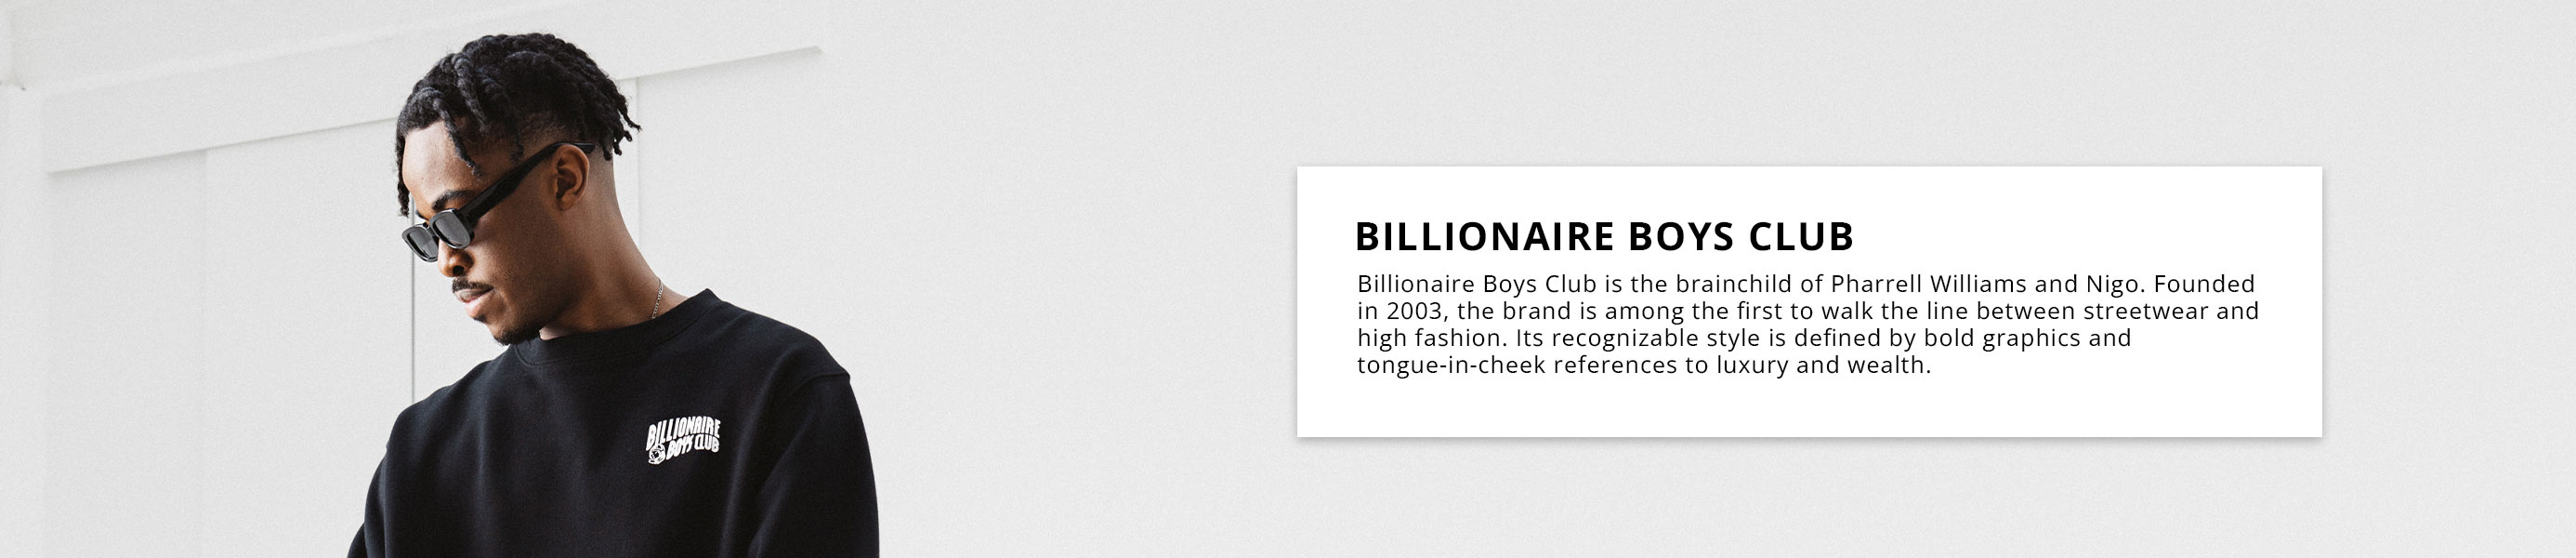 Billionaire Boys Club 